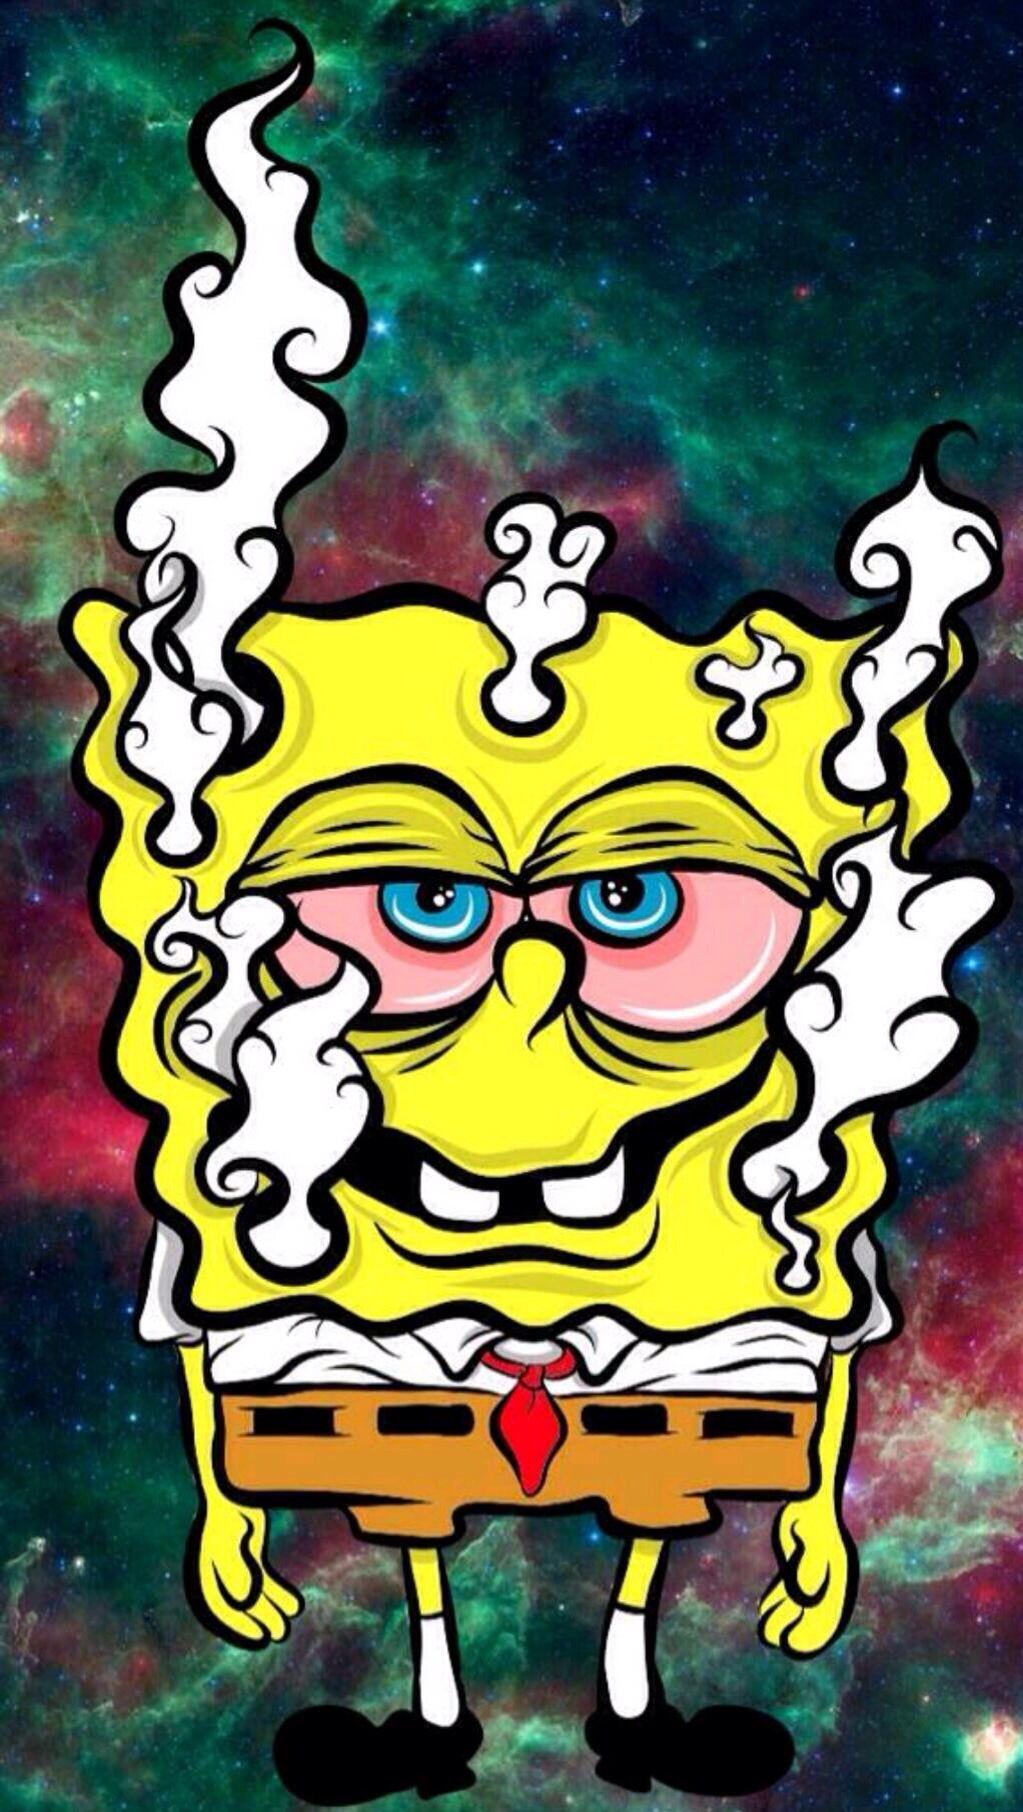 Spongebob smoking weed wallpaper